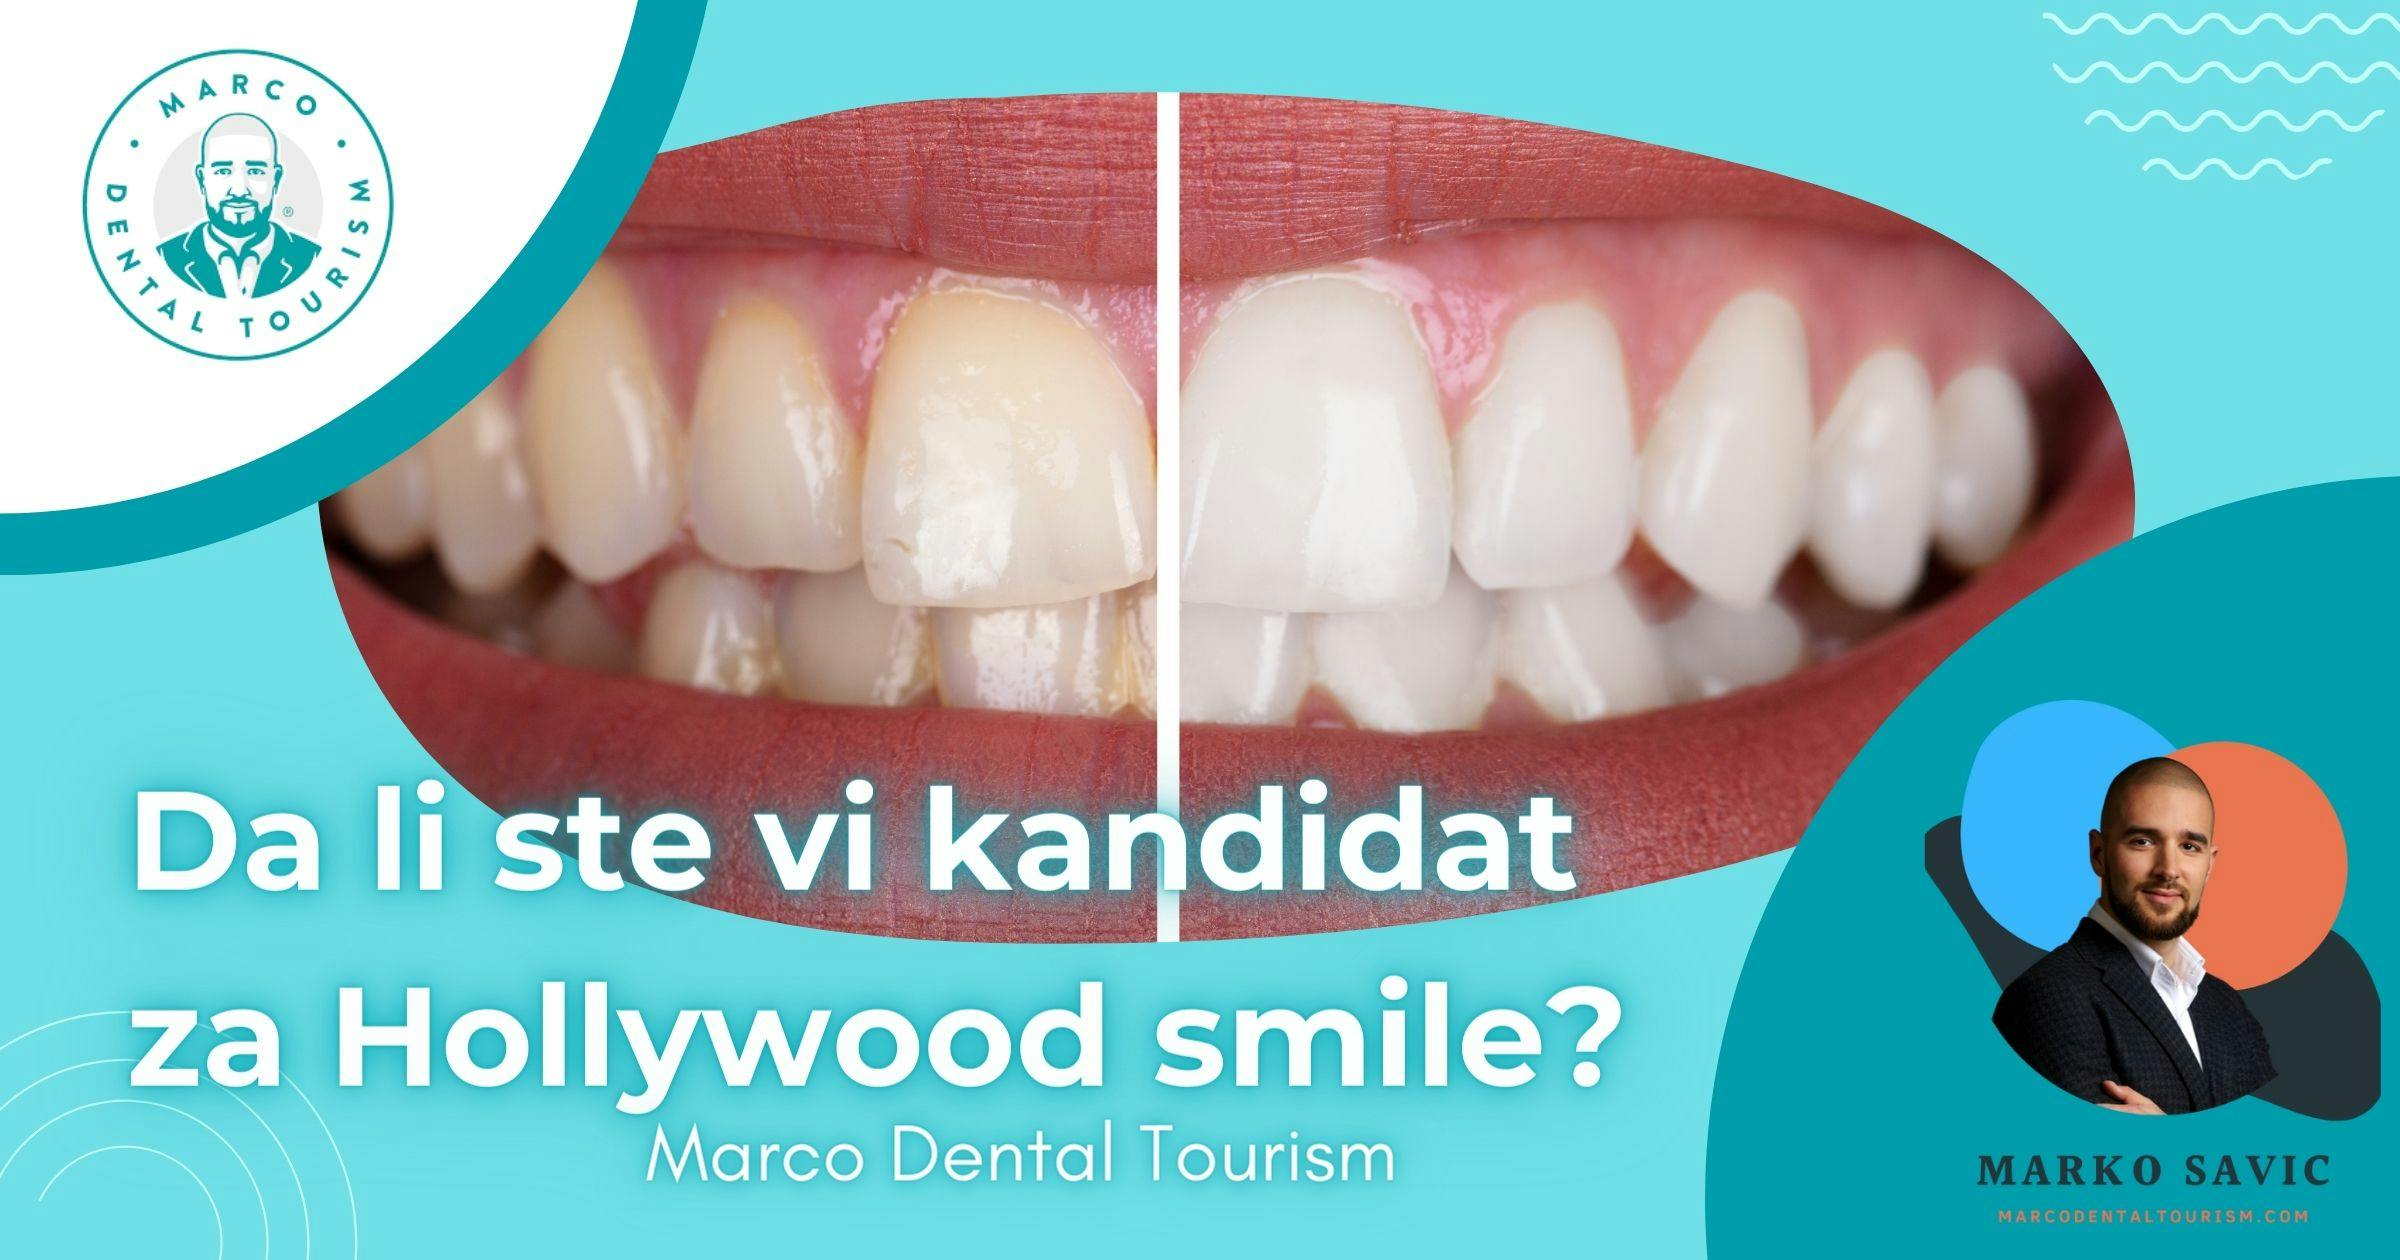 Da li ste vi kandidat za Hollywood smile - Marco Dental Tourism